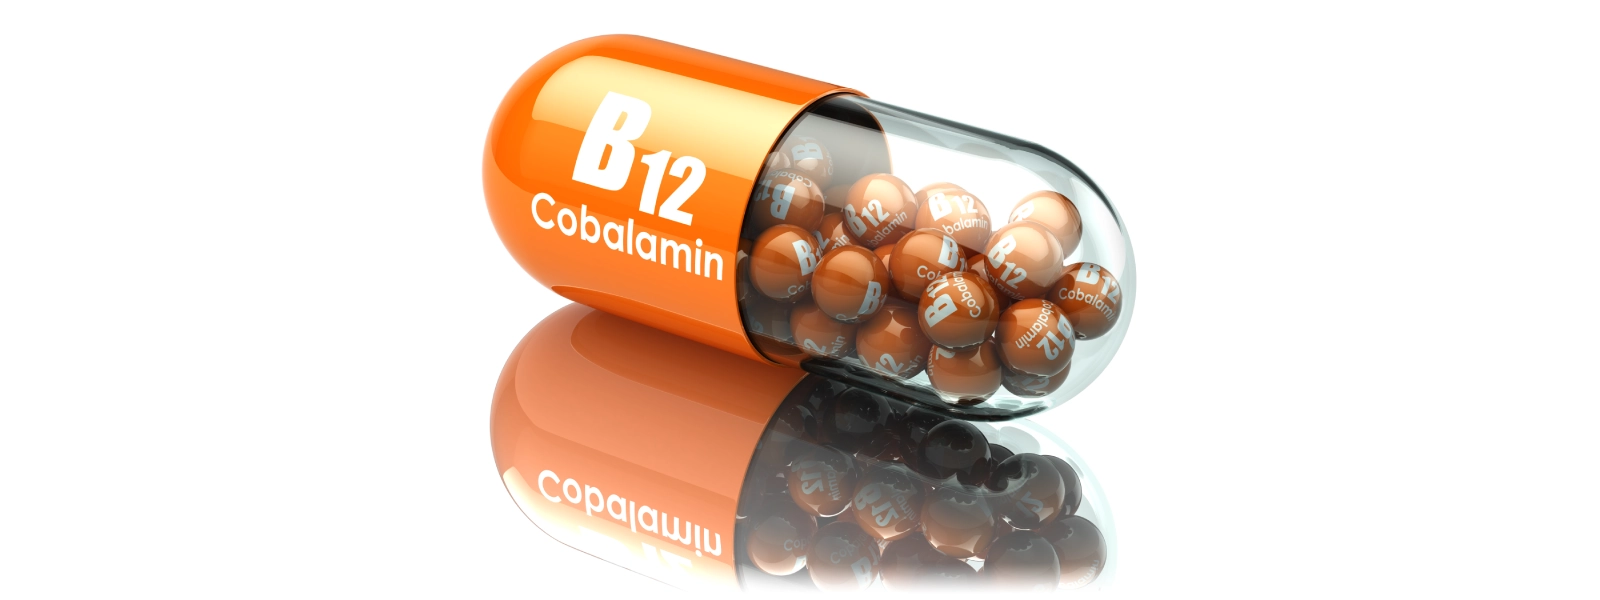 B12 Vitamini Nedir?